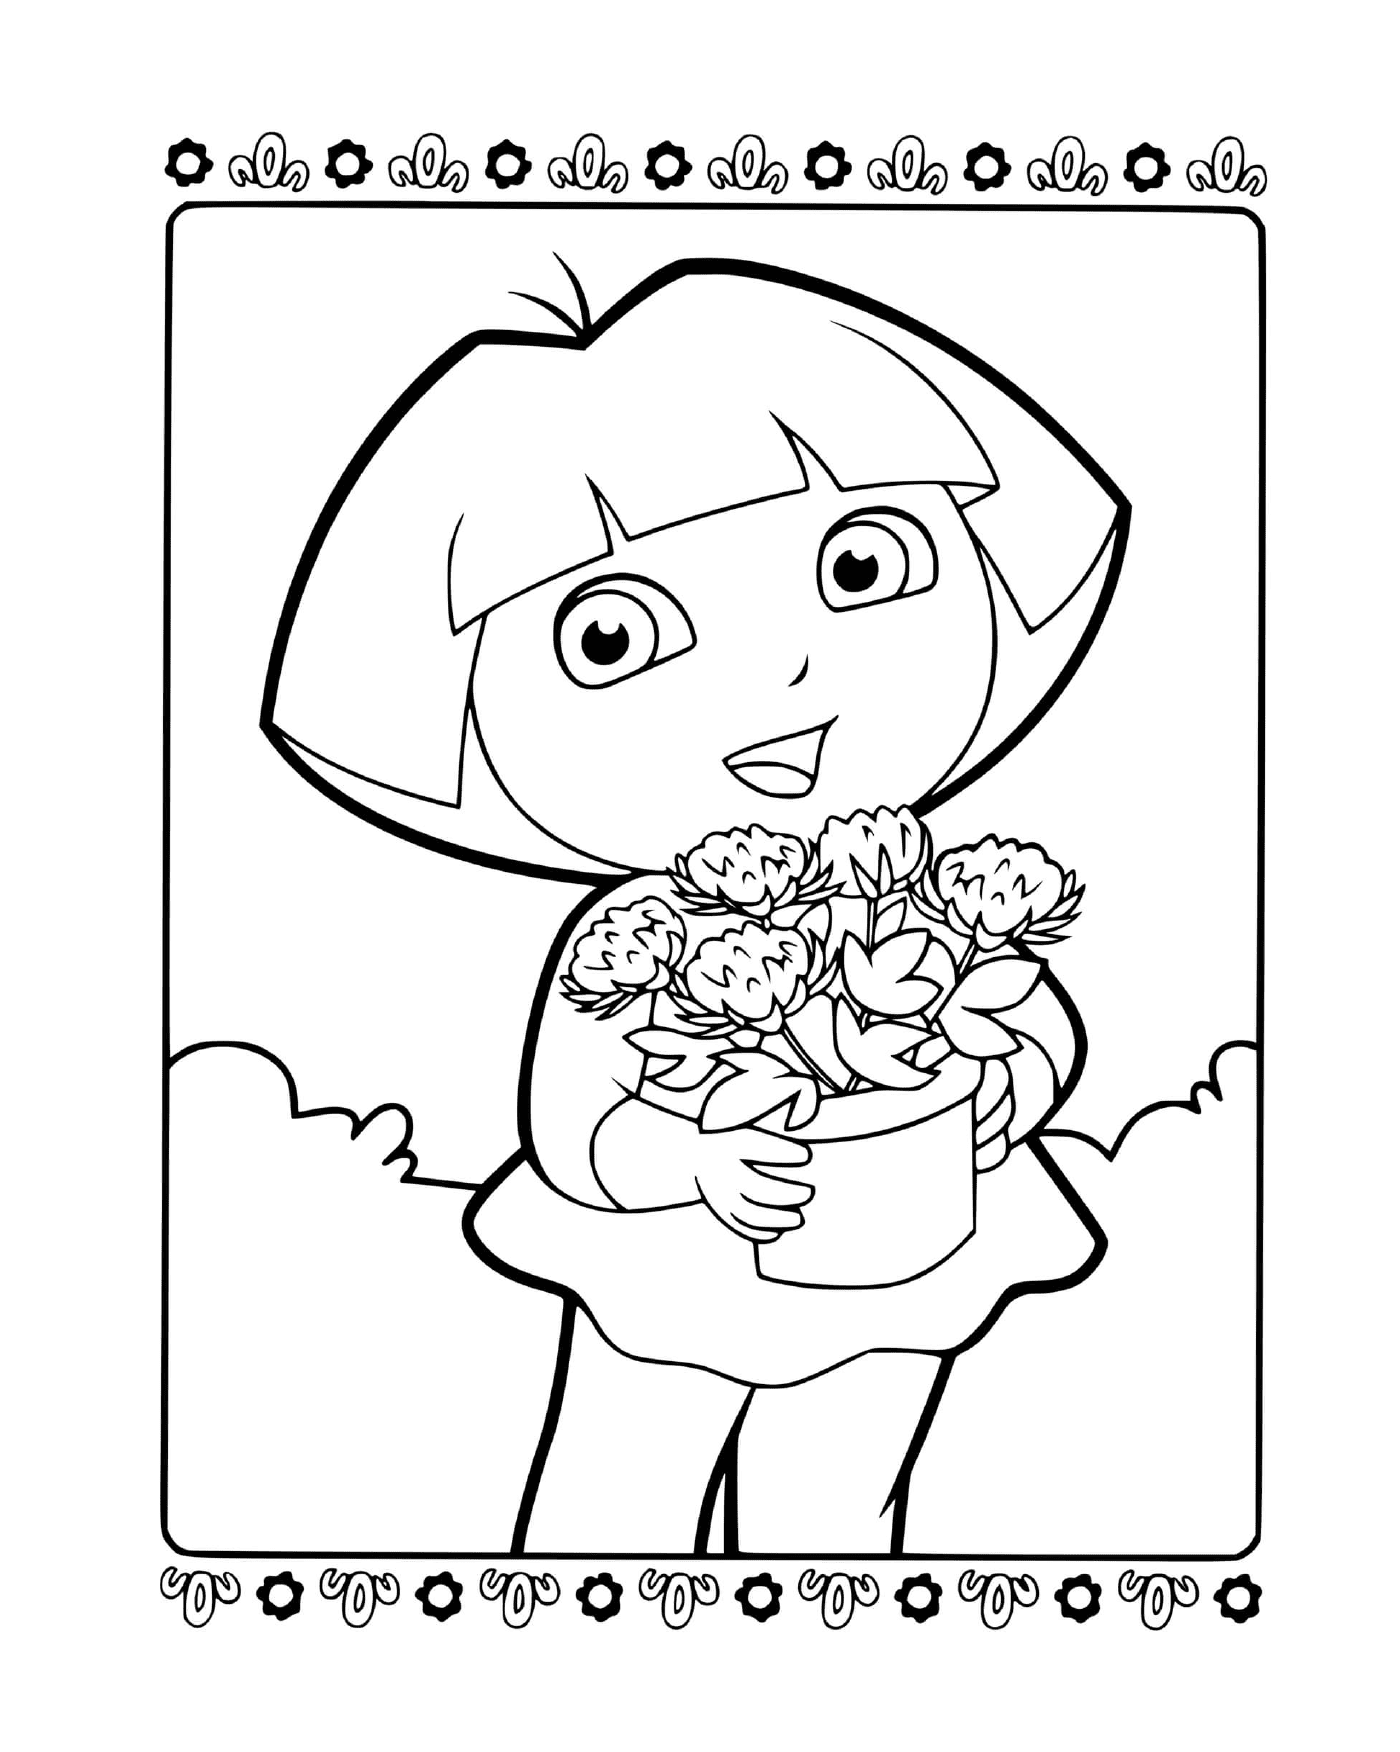  Dora gives herself to her favorite gardening 